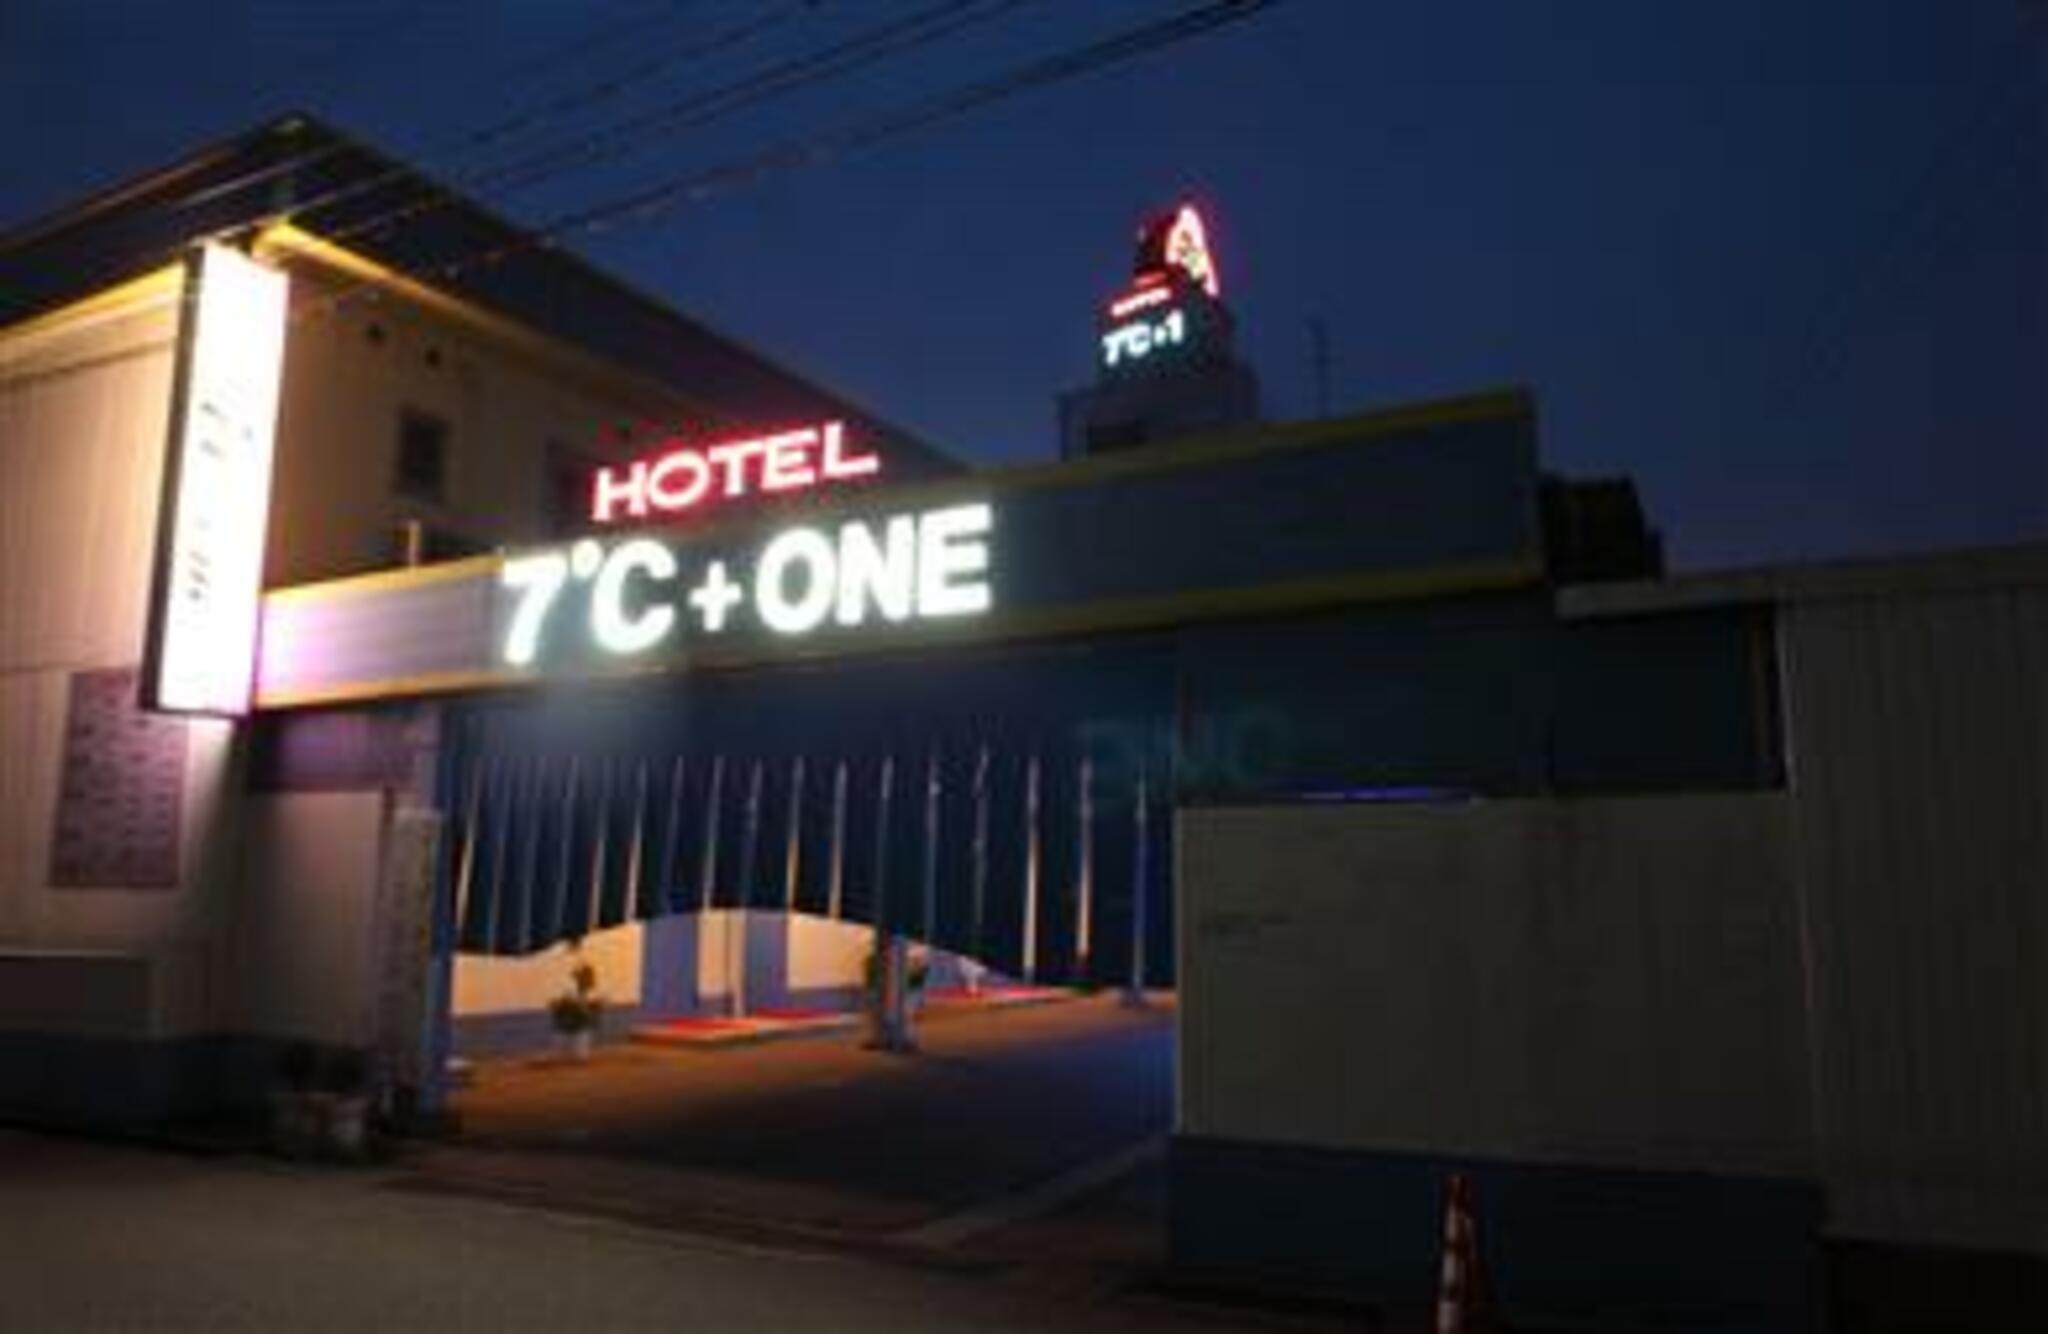 HOTEL 7°C+ONEの代表写真3